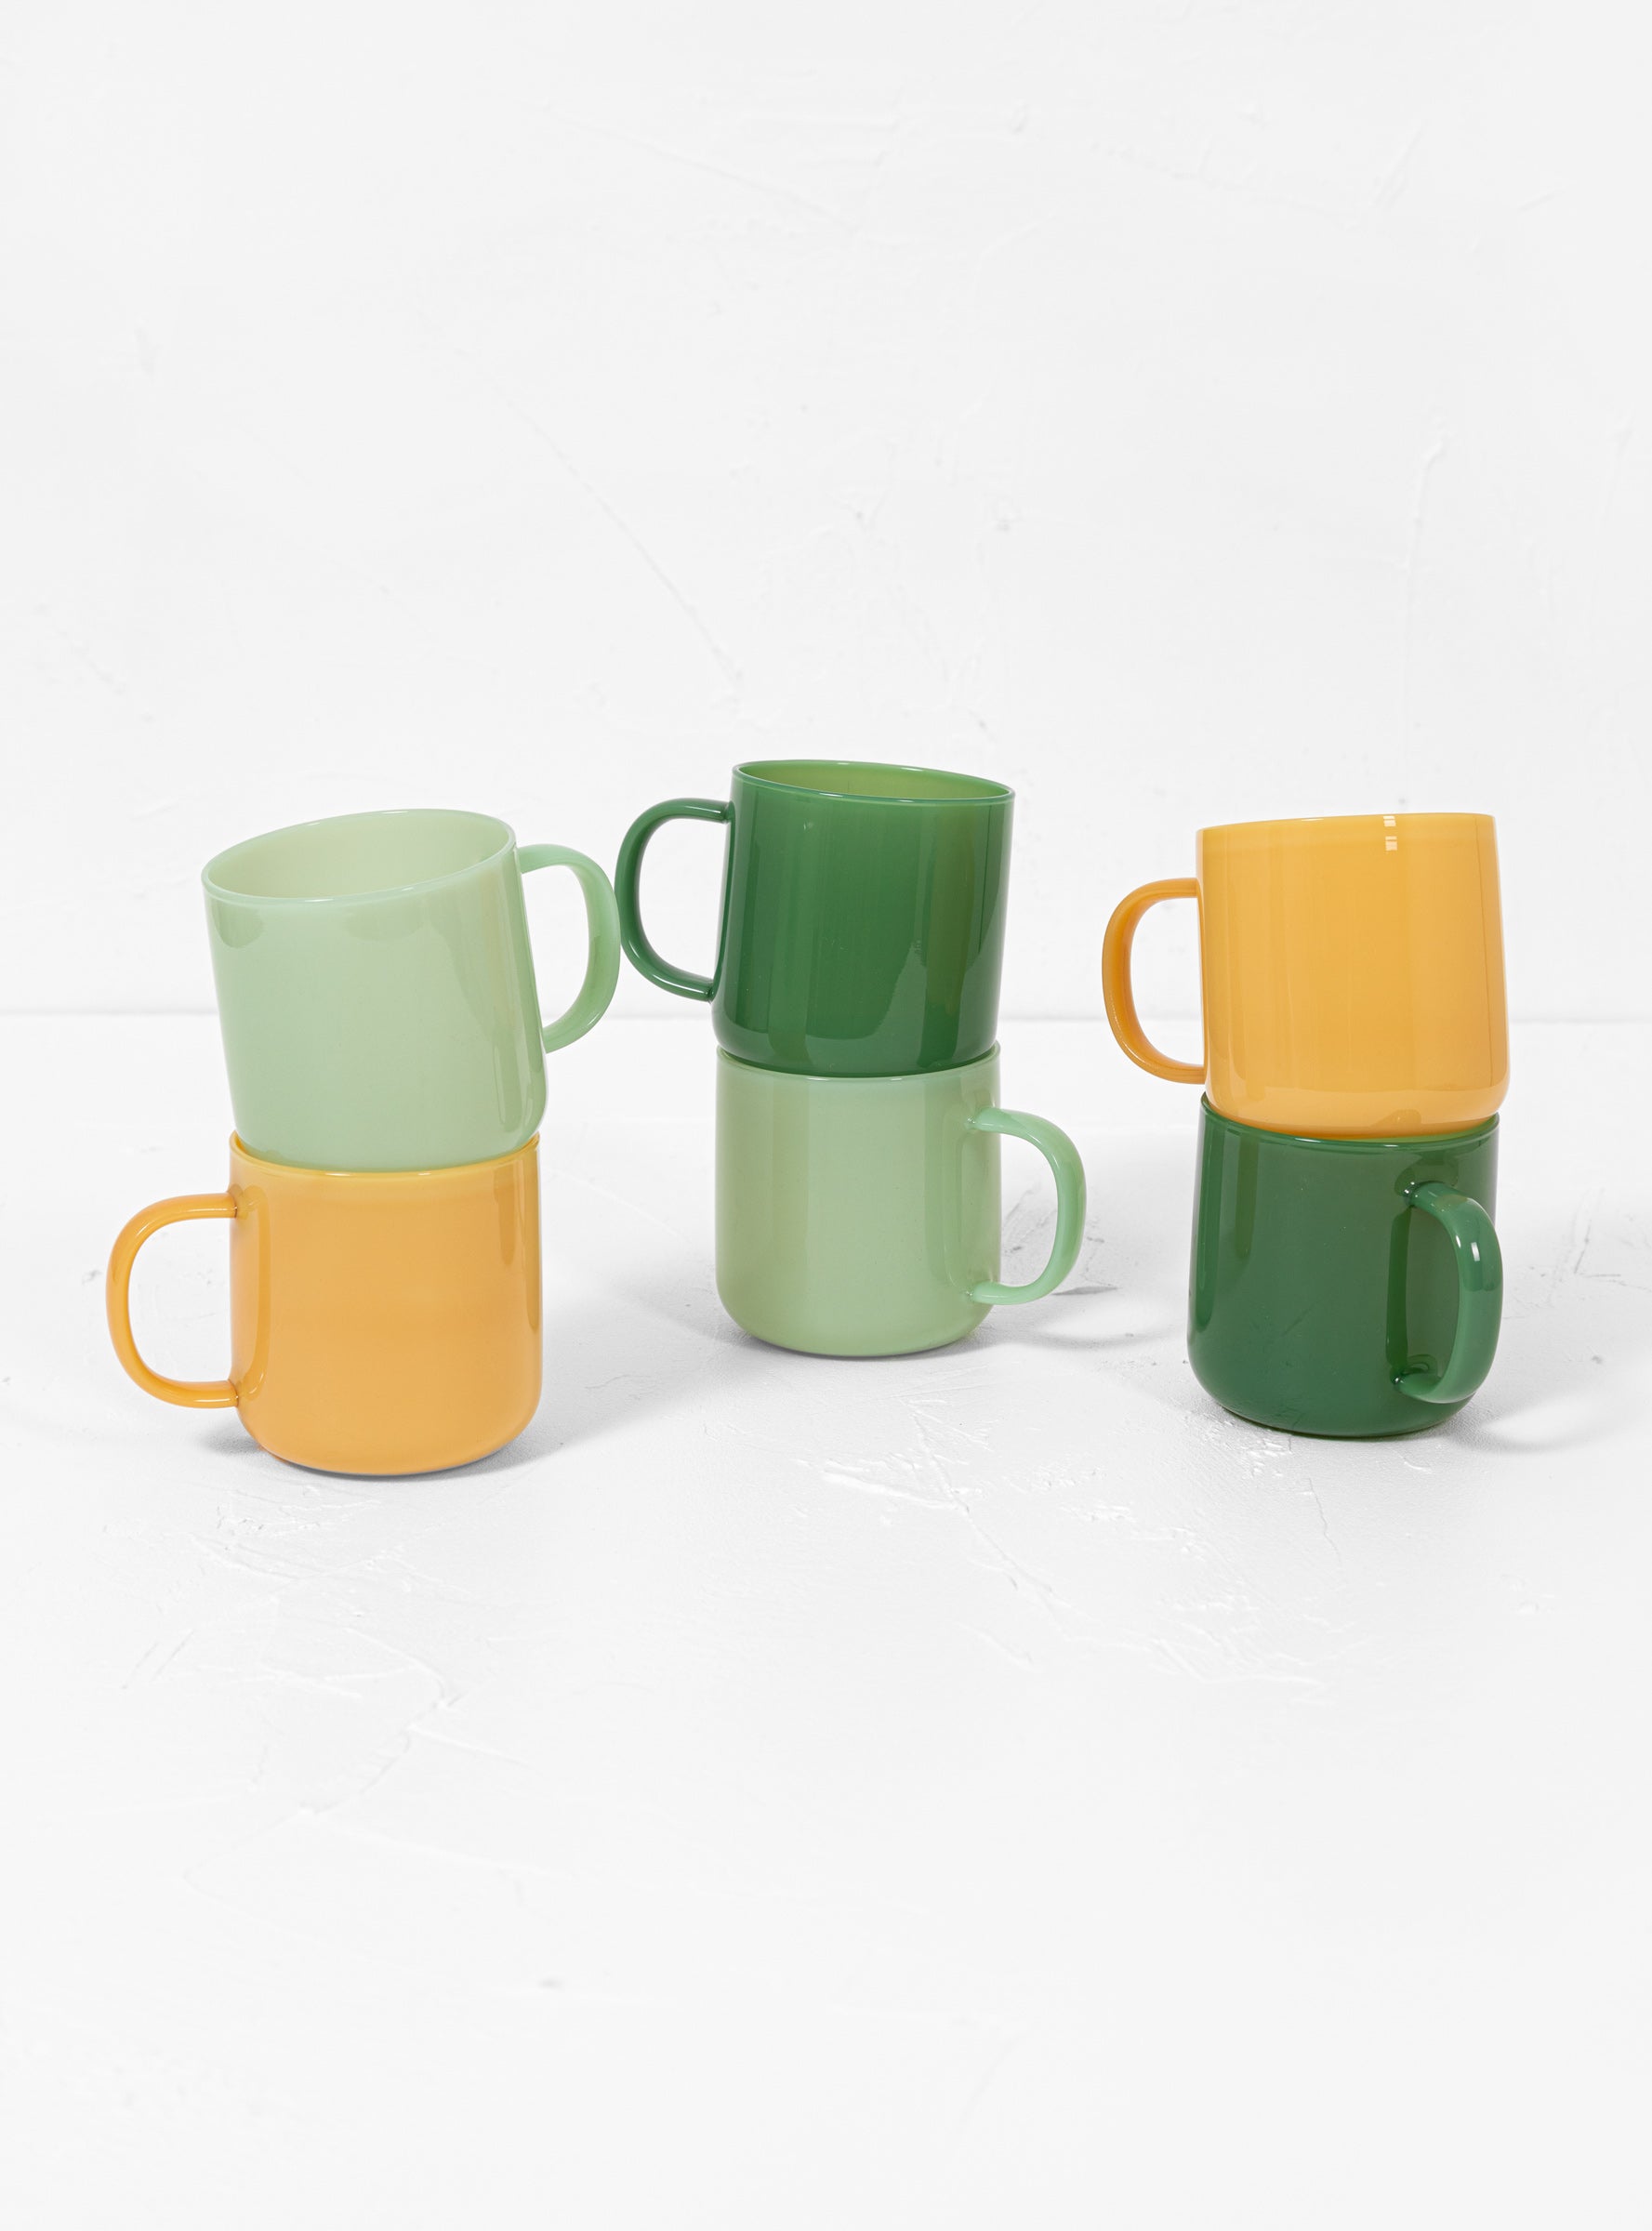 Hay Borosilicate Mug - Set of 2 - Jade Yellow